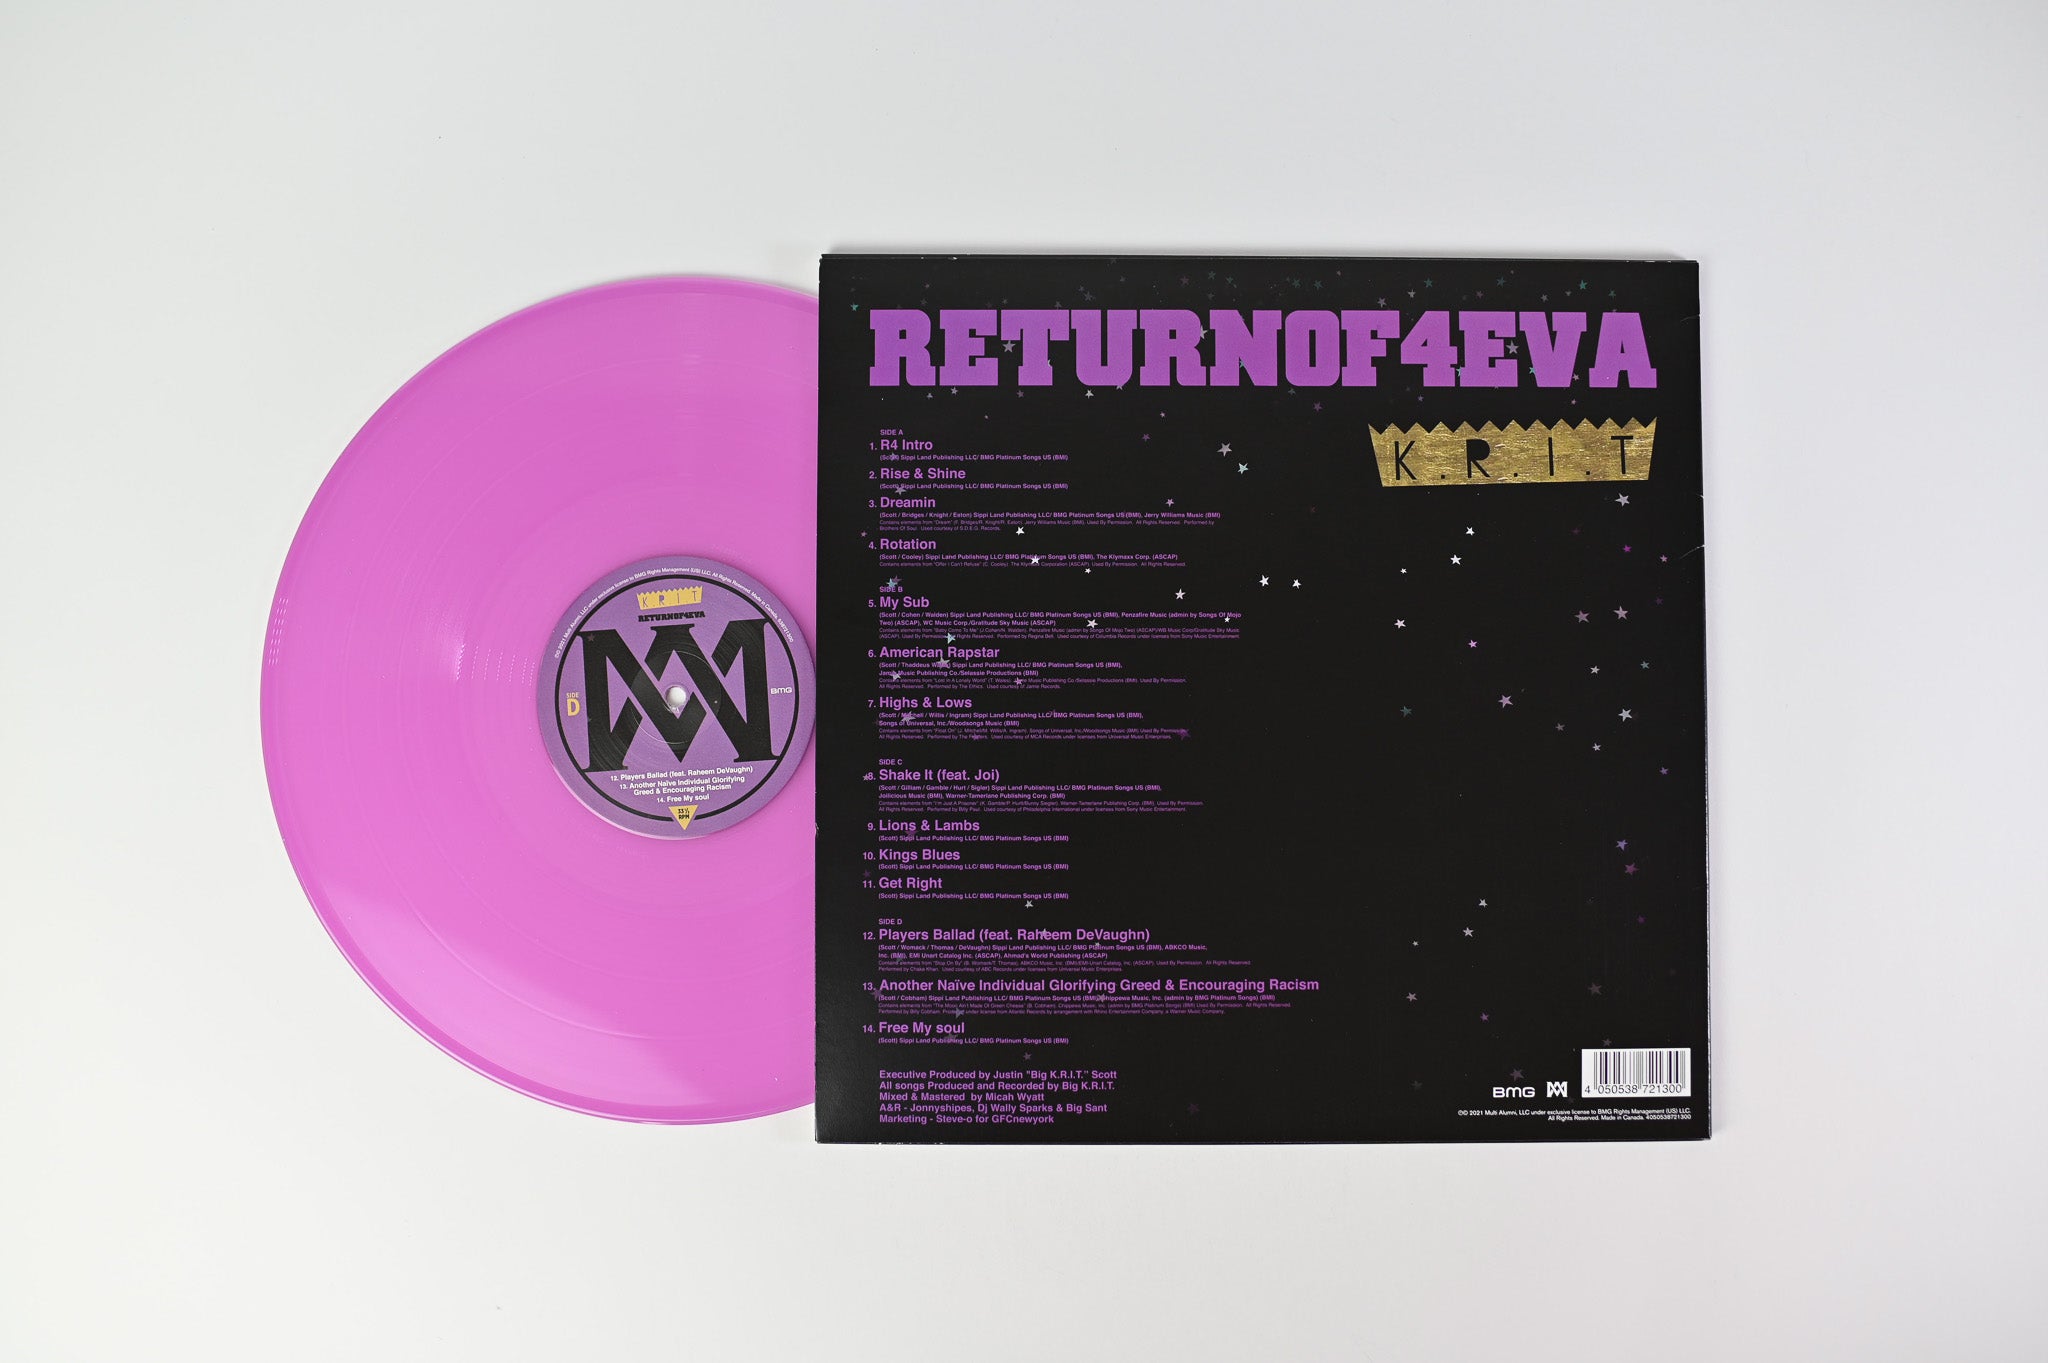 Big K.R.I.T. - ReturnOf4Eva on Multi Alumni Purple Vinyl Reissue